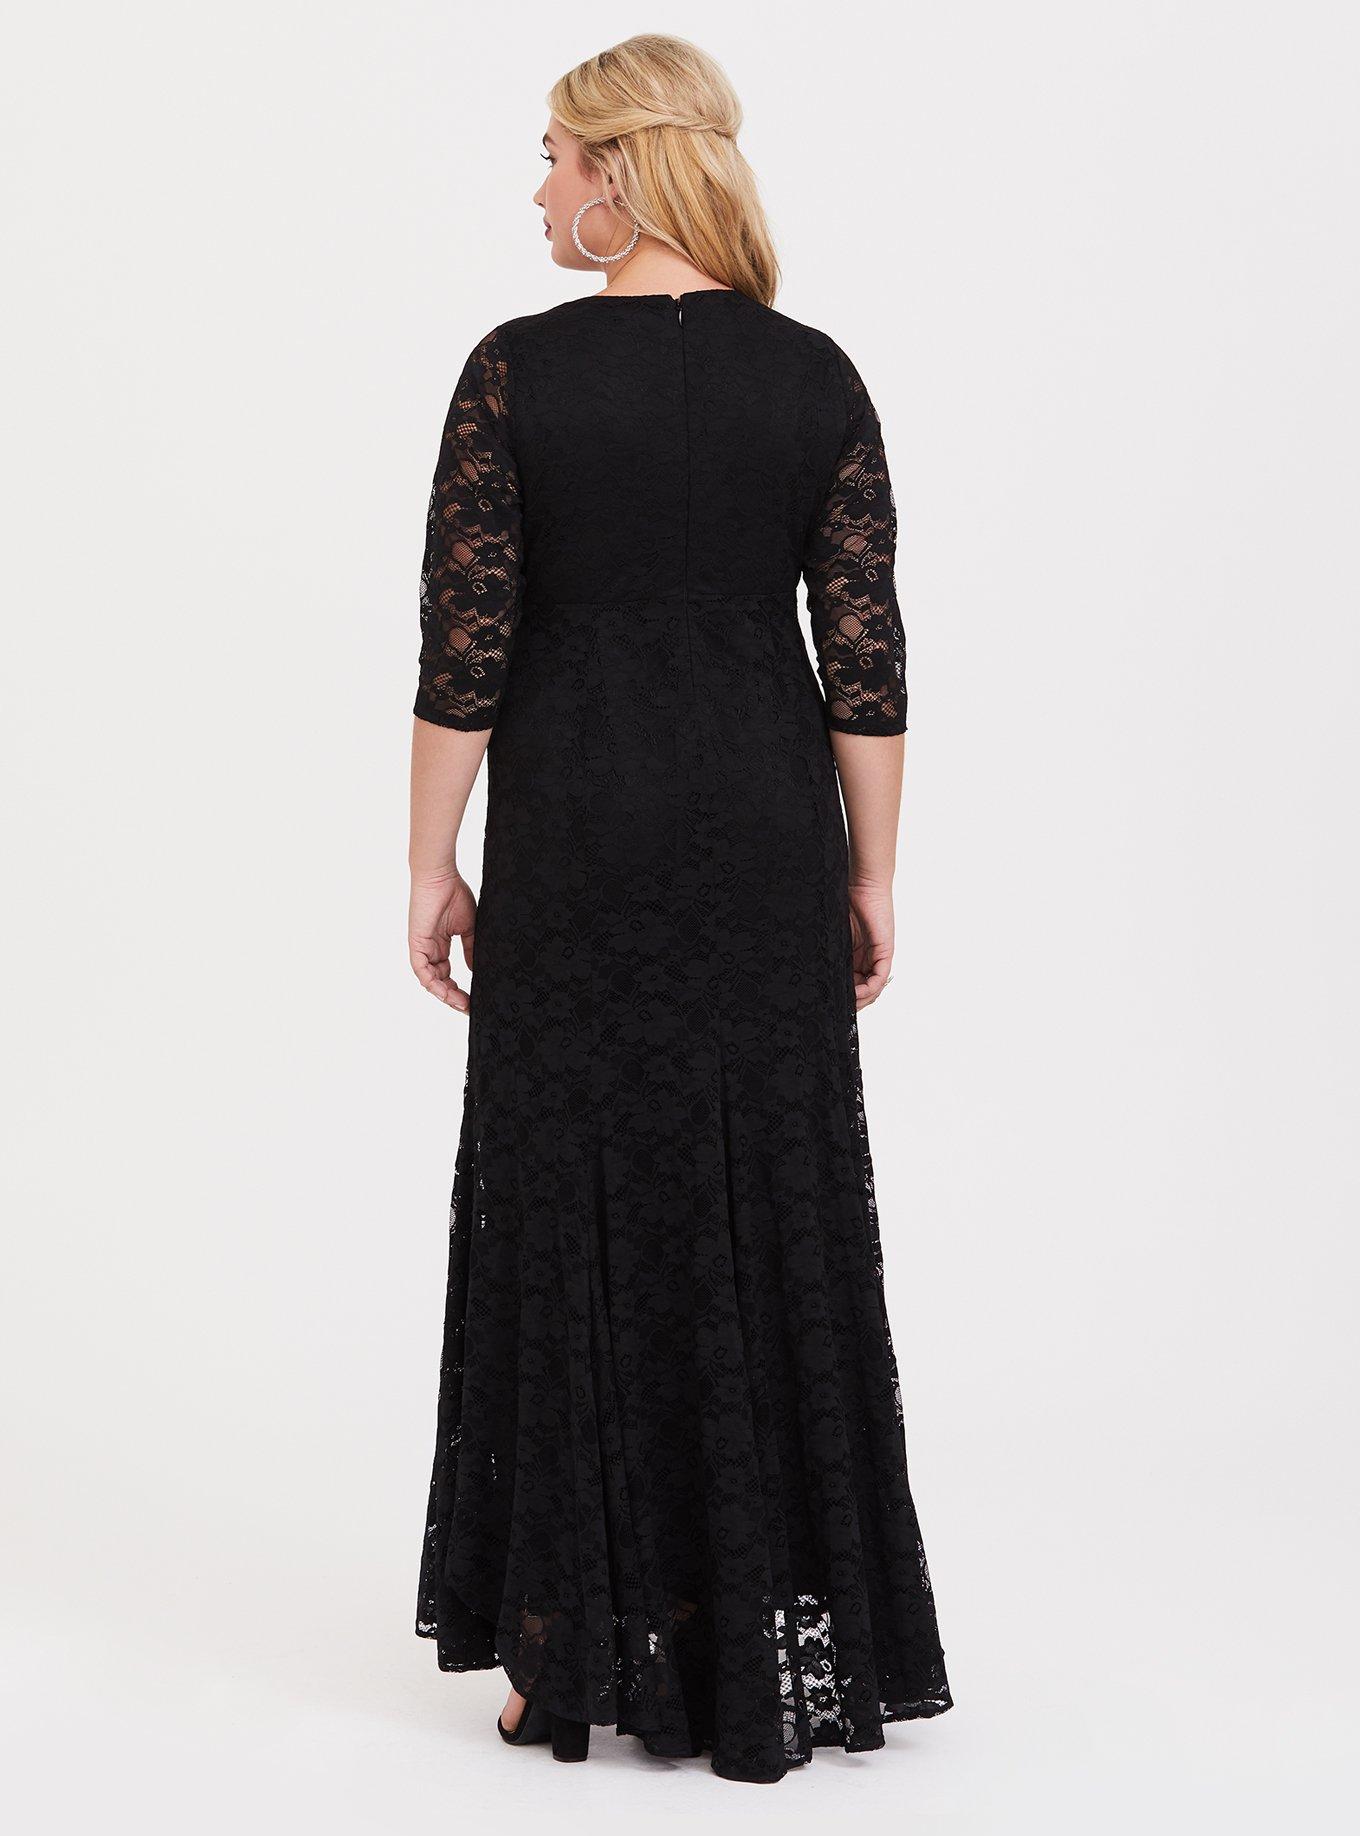 Plus Size - Special Occasion Black Lace Gown - Torrid